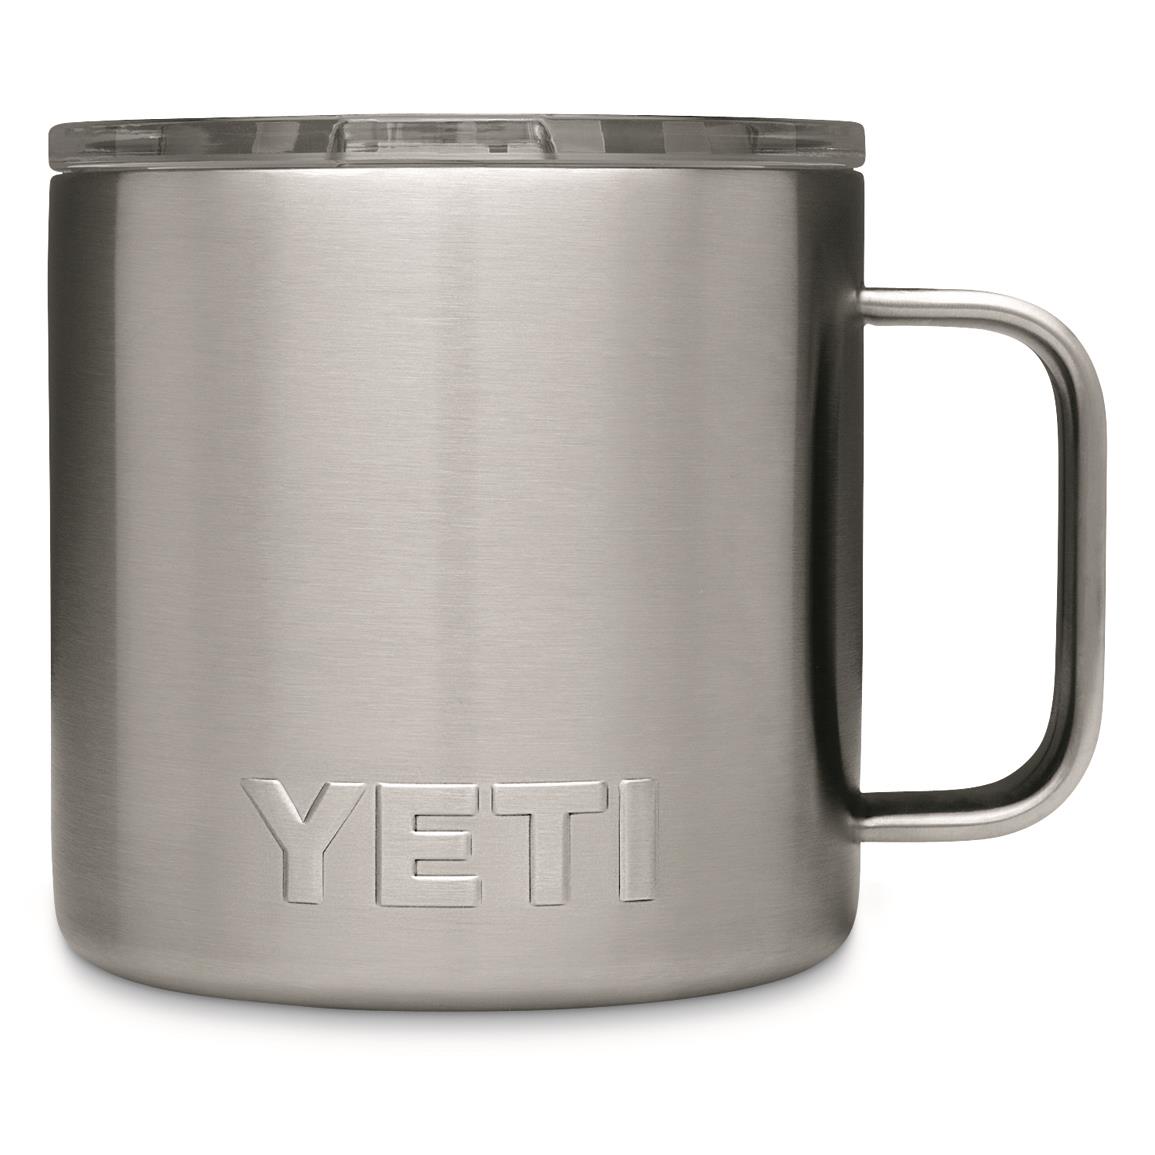 YETI Rambler 14 oz. Mug with Lid 703966, Drinkware at